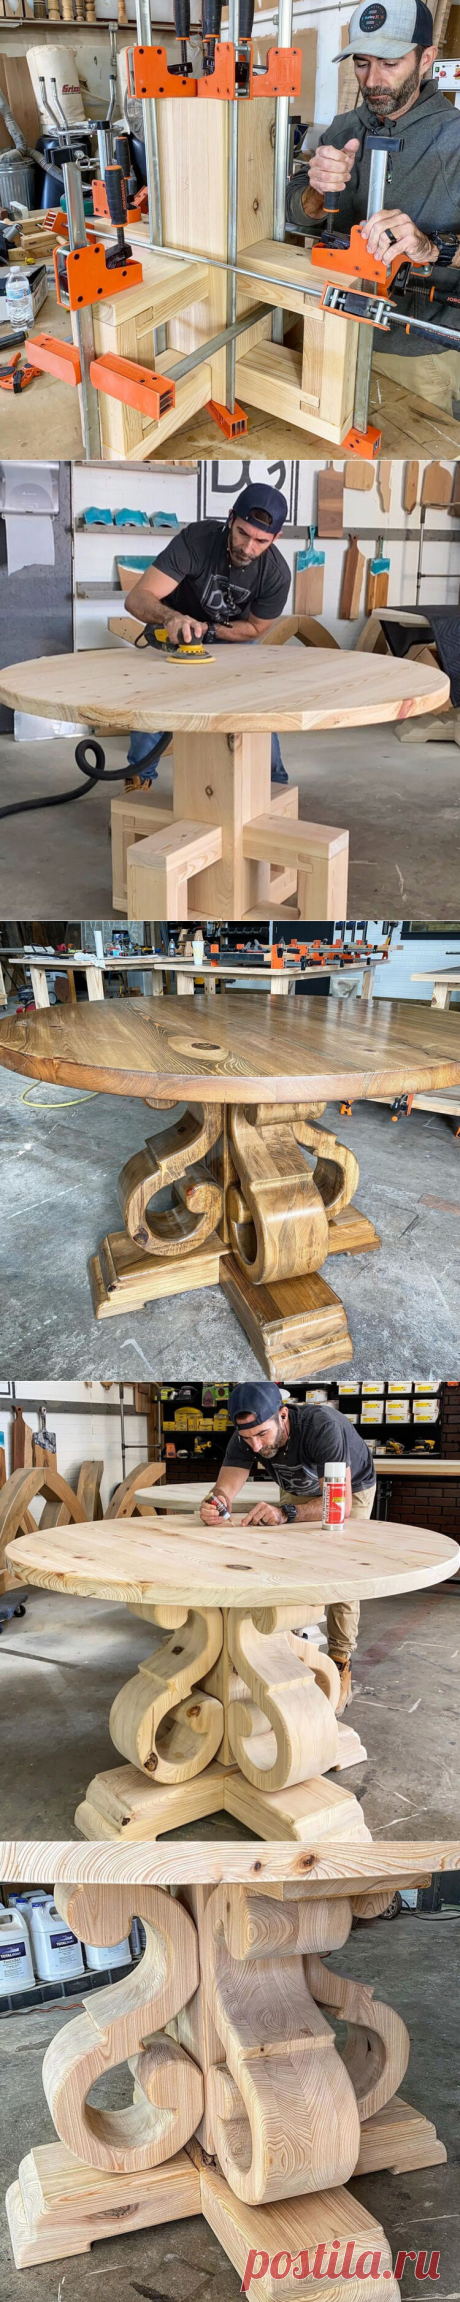 Авторские столы из дерева от Designs by Donnie